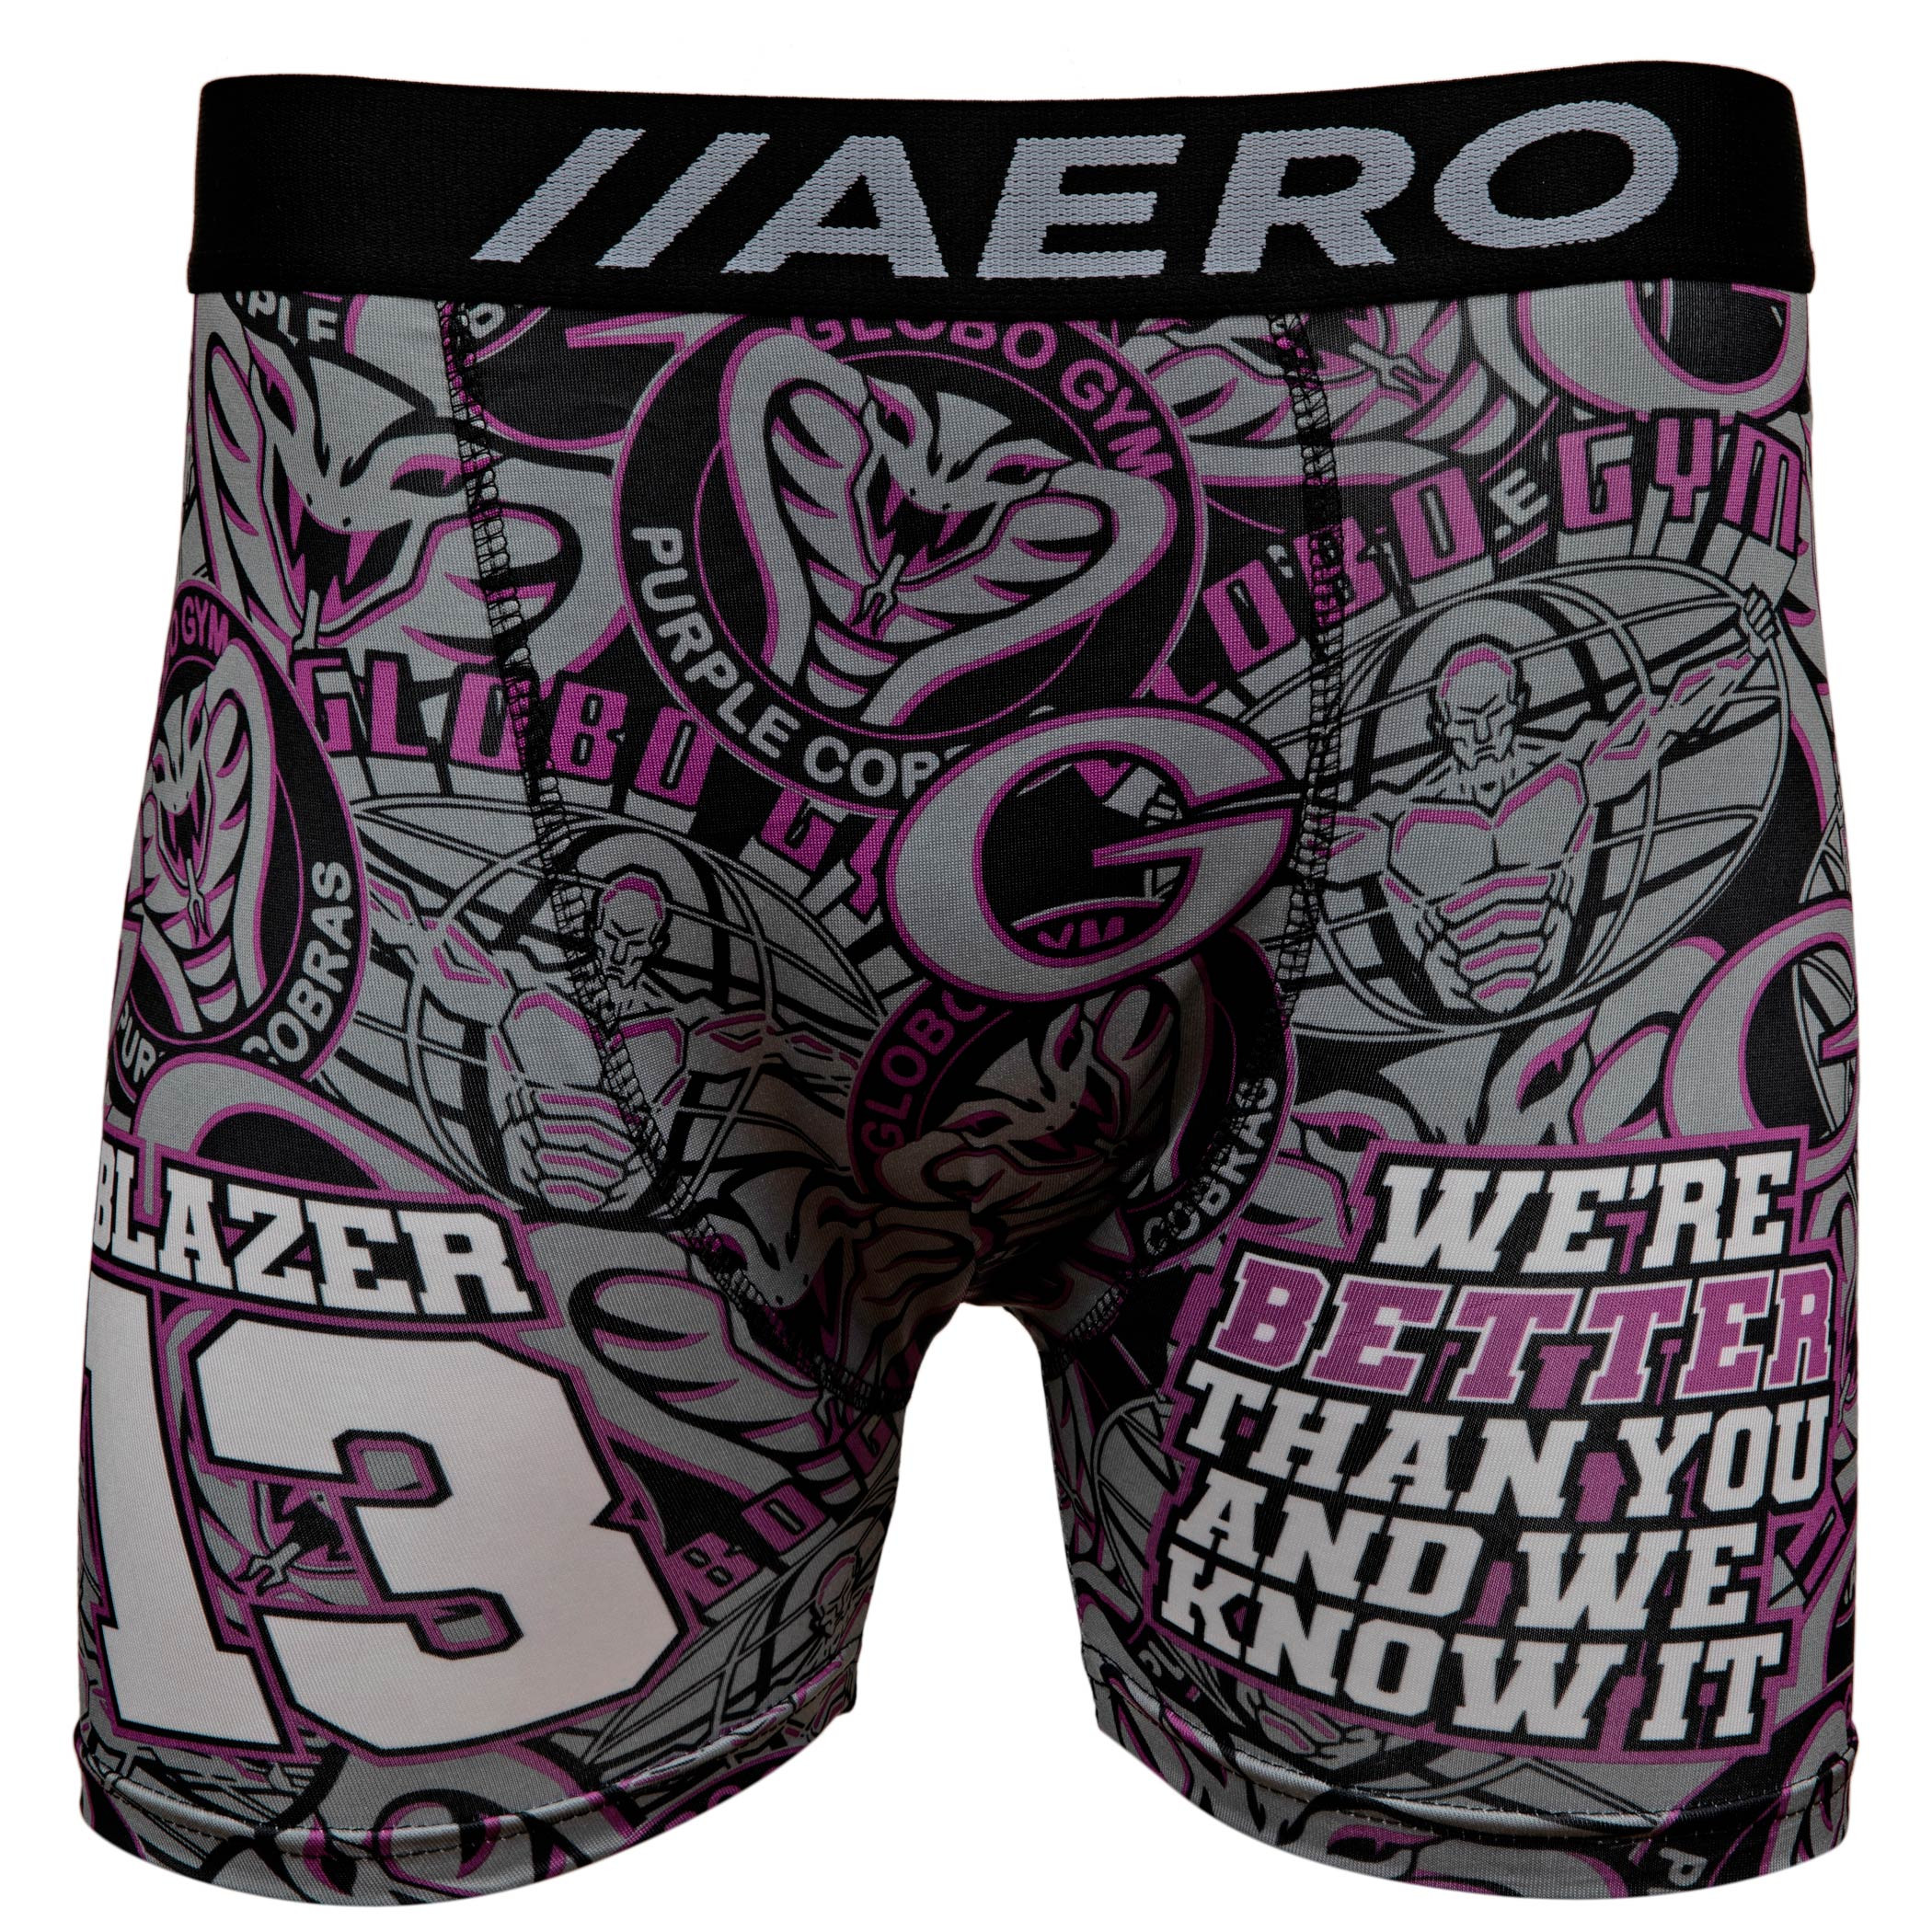 Dodgeball Average Joe's VS. Globo Gym Aero Boxer Briefs Underwear 2-Pack